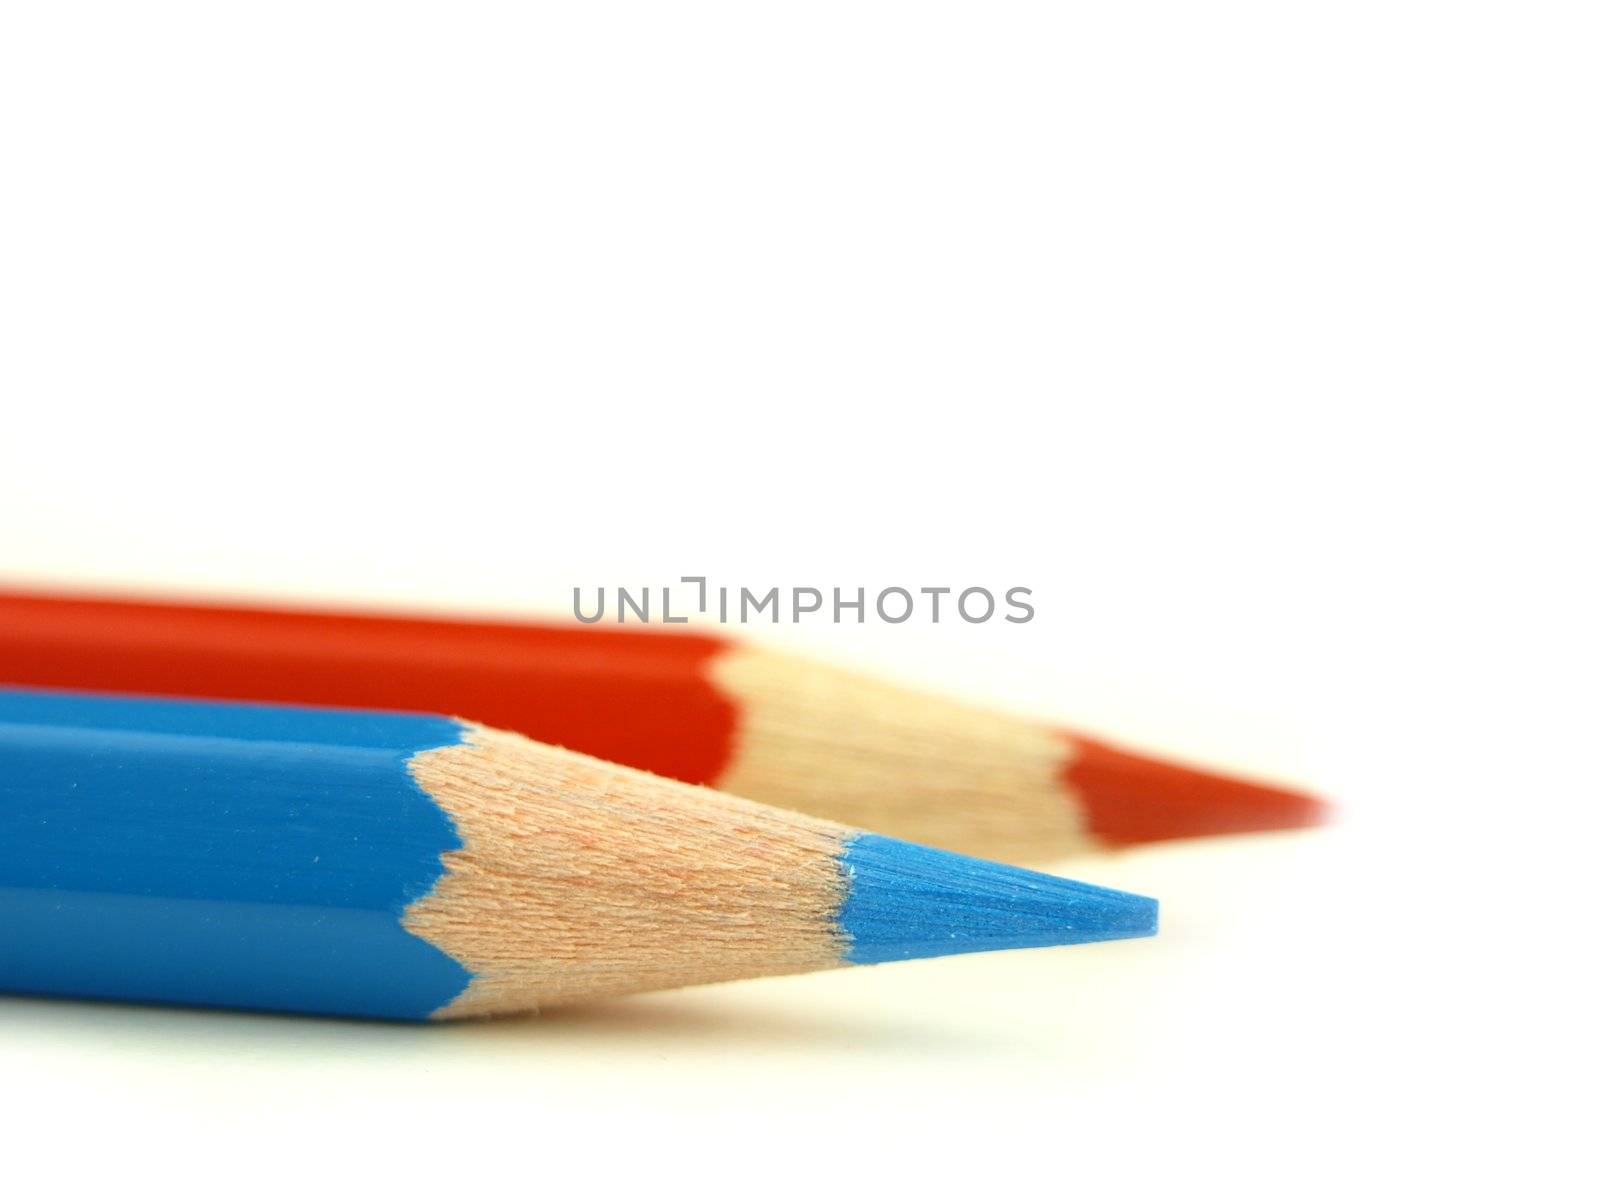 crayon and pencil by luckyhumek